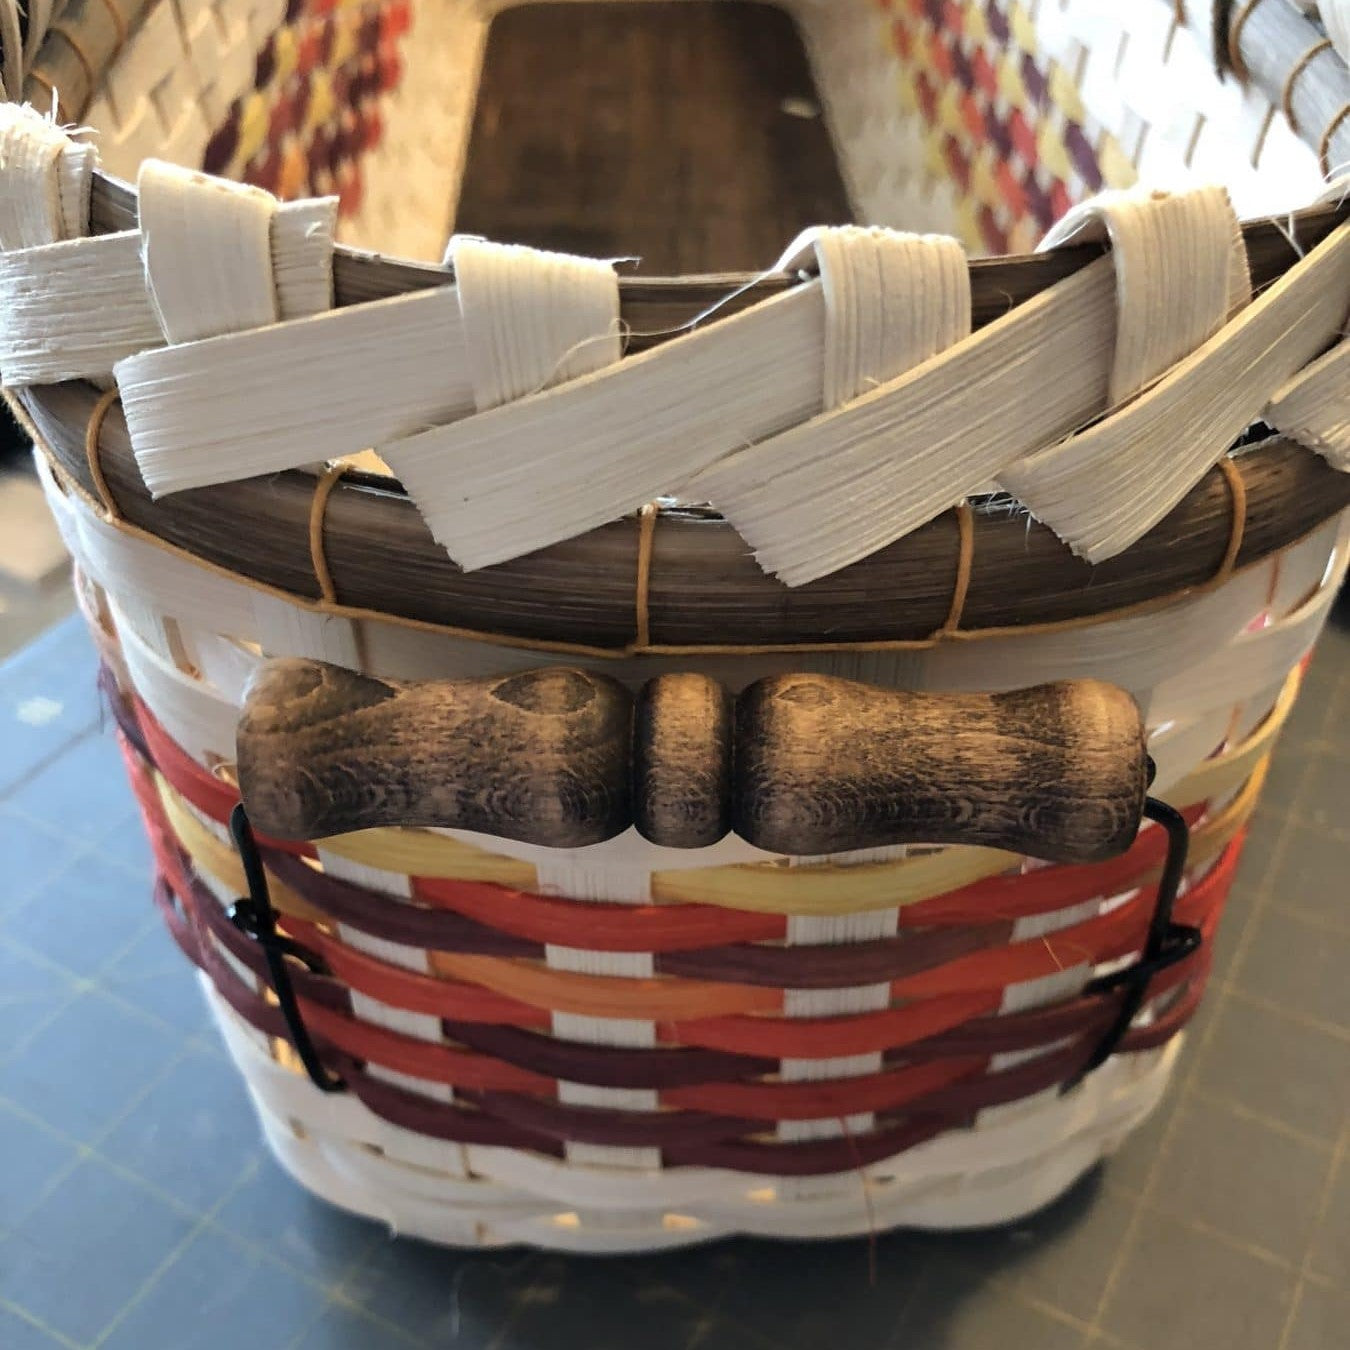 Five Loaves Basket